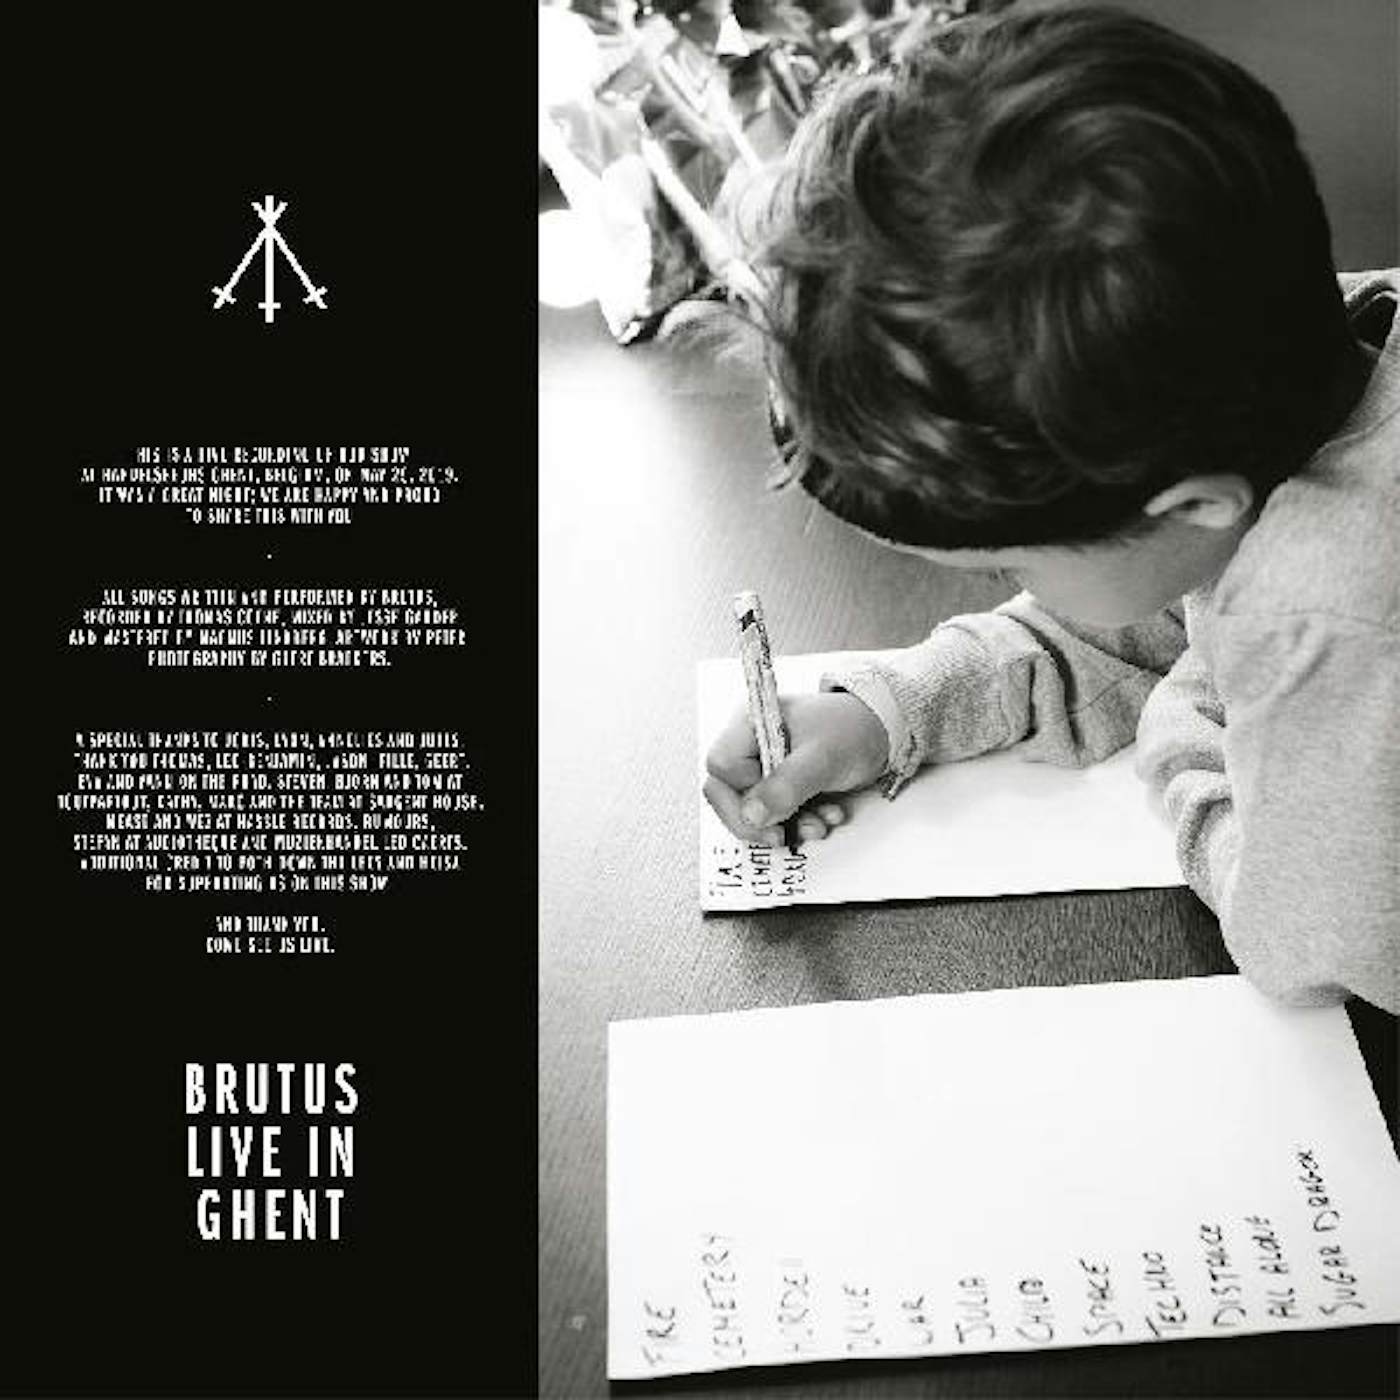 Brutus LIVE IN GHENT (DL CARD) Vinyl Record